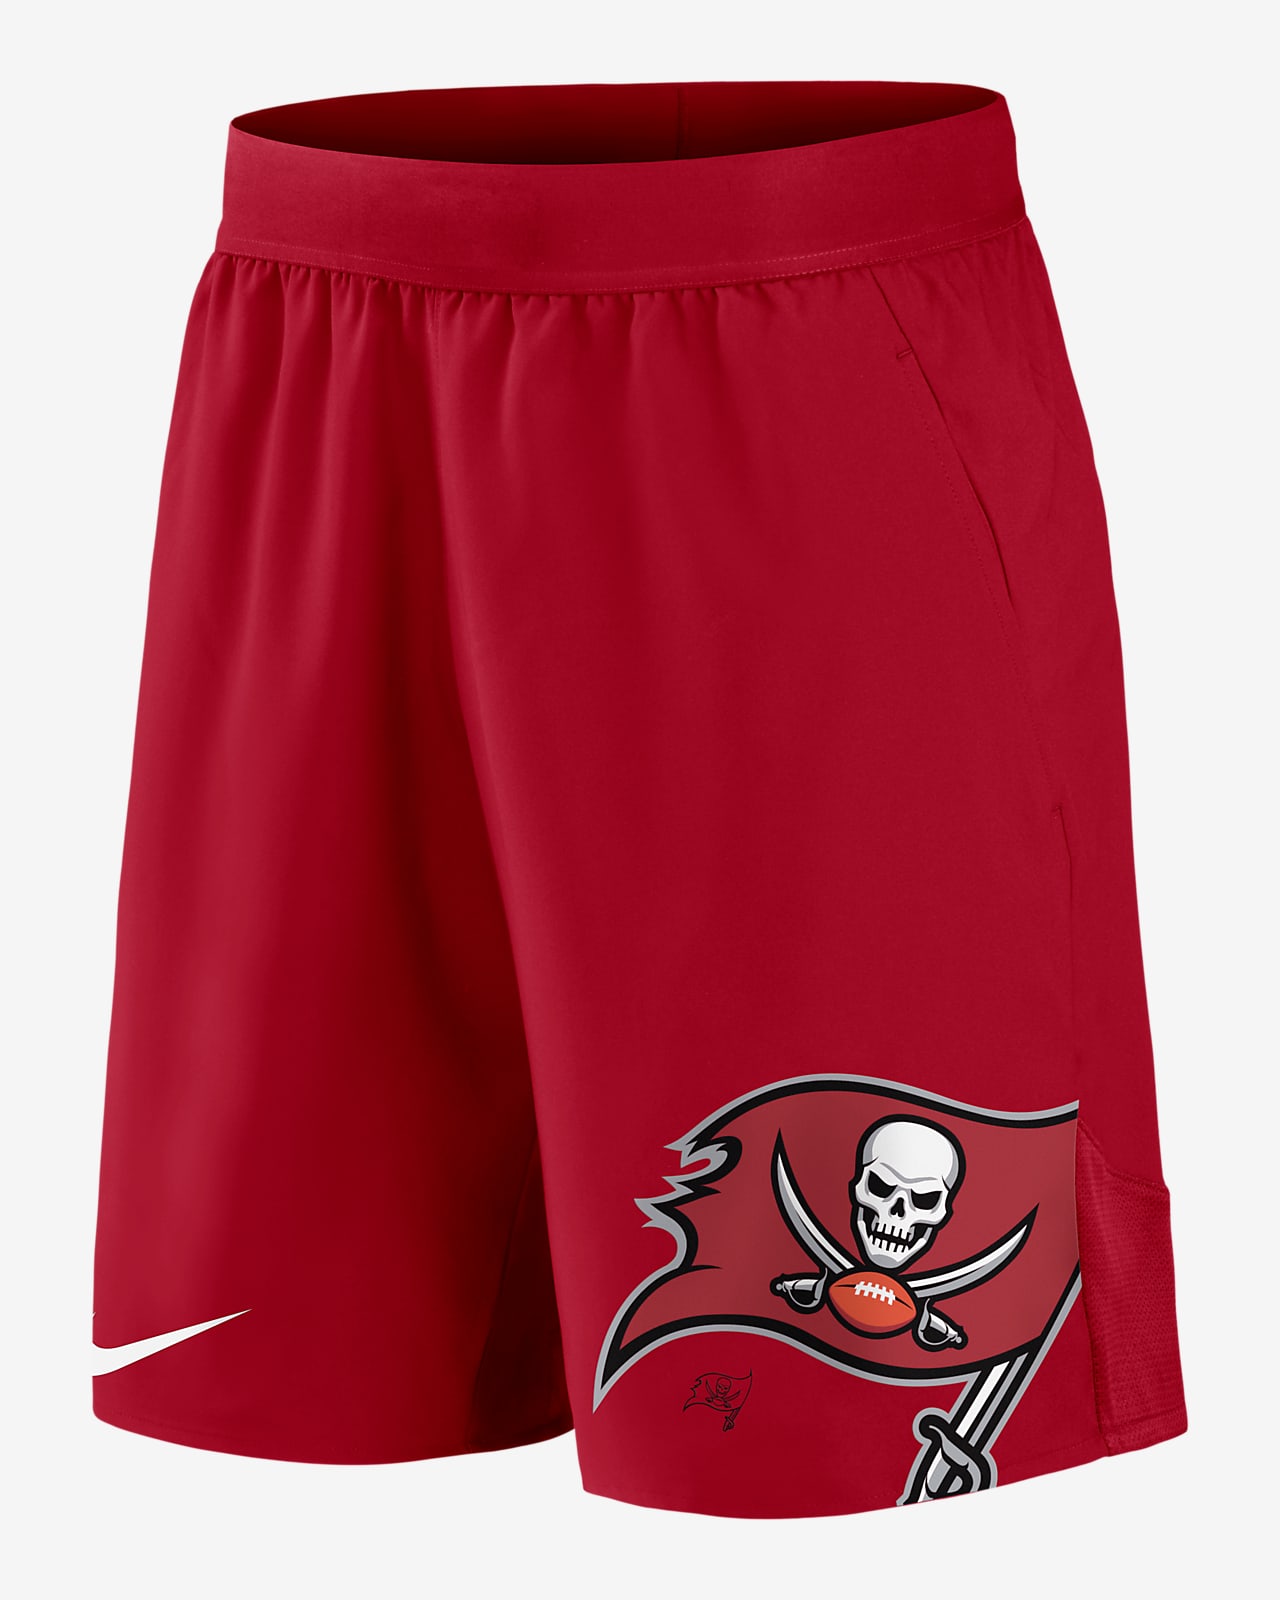 Nike Dri-FIT Stretch (NFL Tampa Bay Buccaneers) Men's Shorts